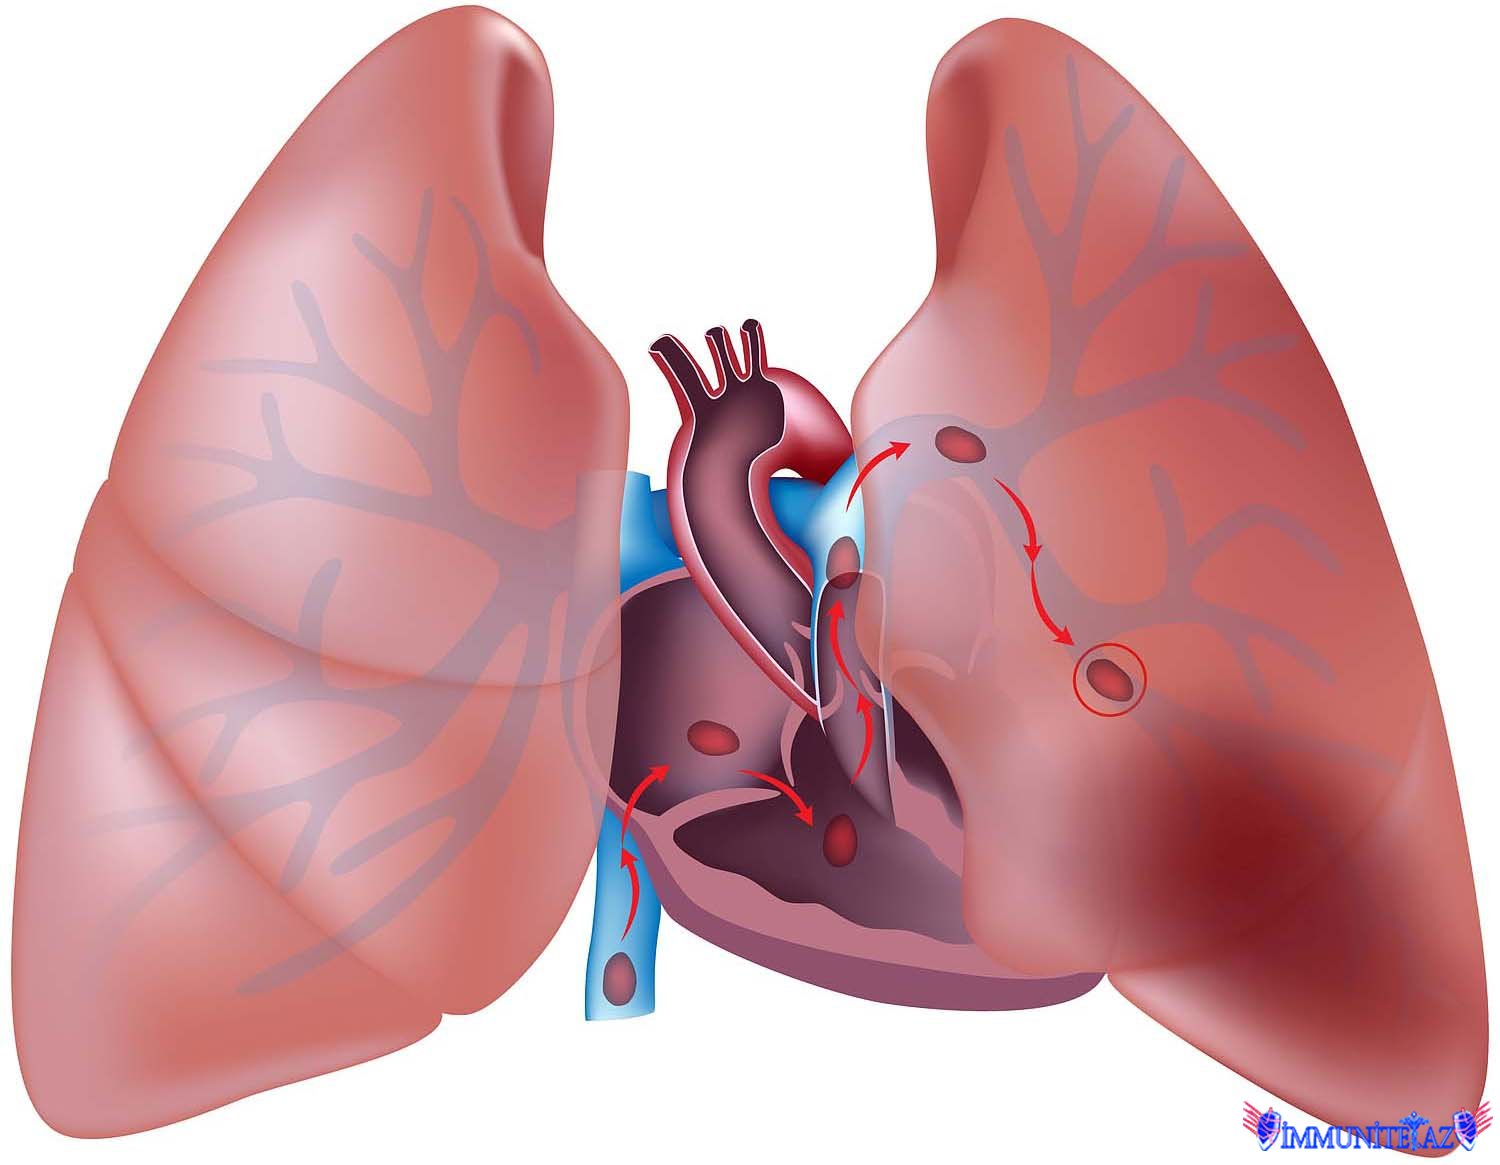 Ağ ciyər arteriyasının tromboemboliyası